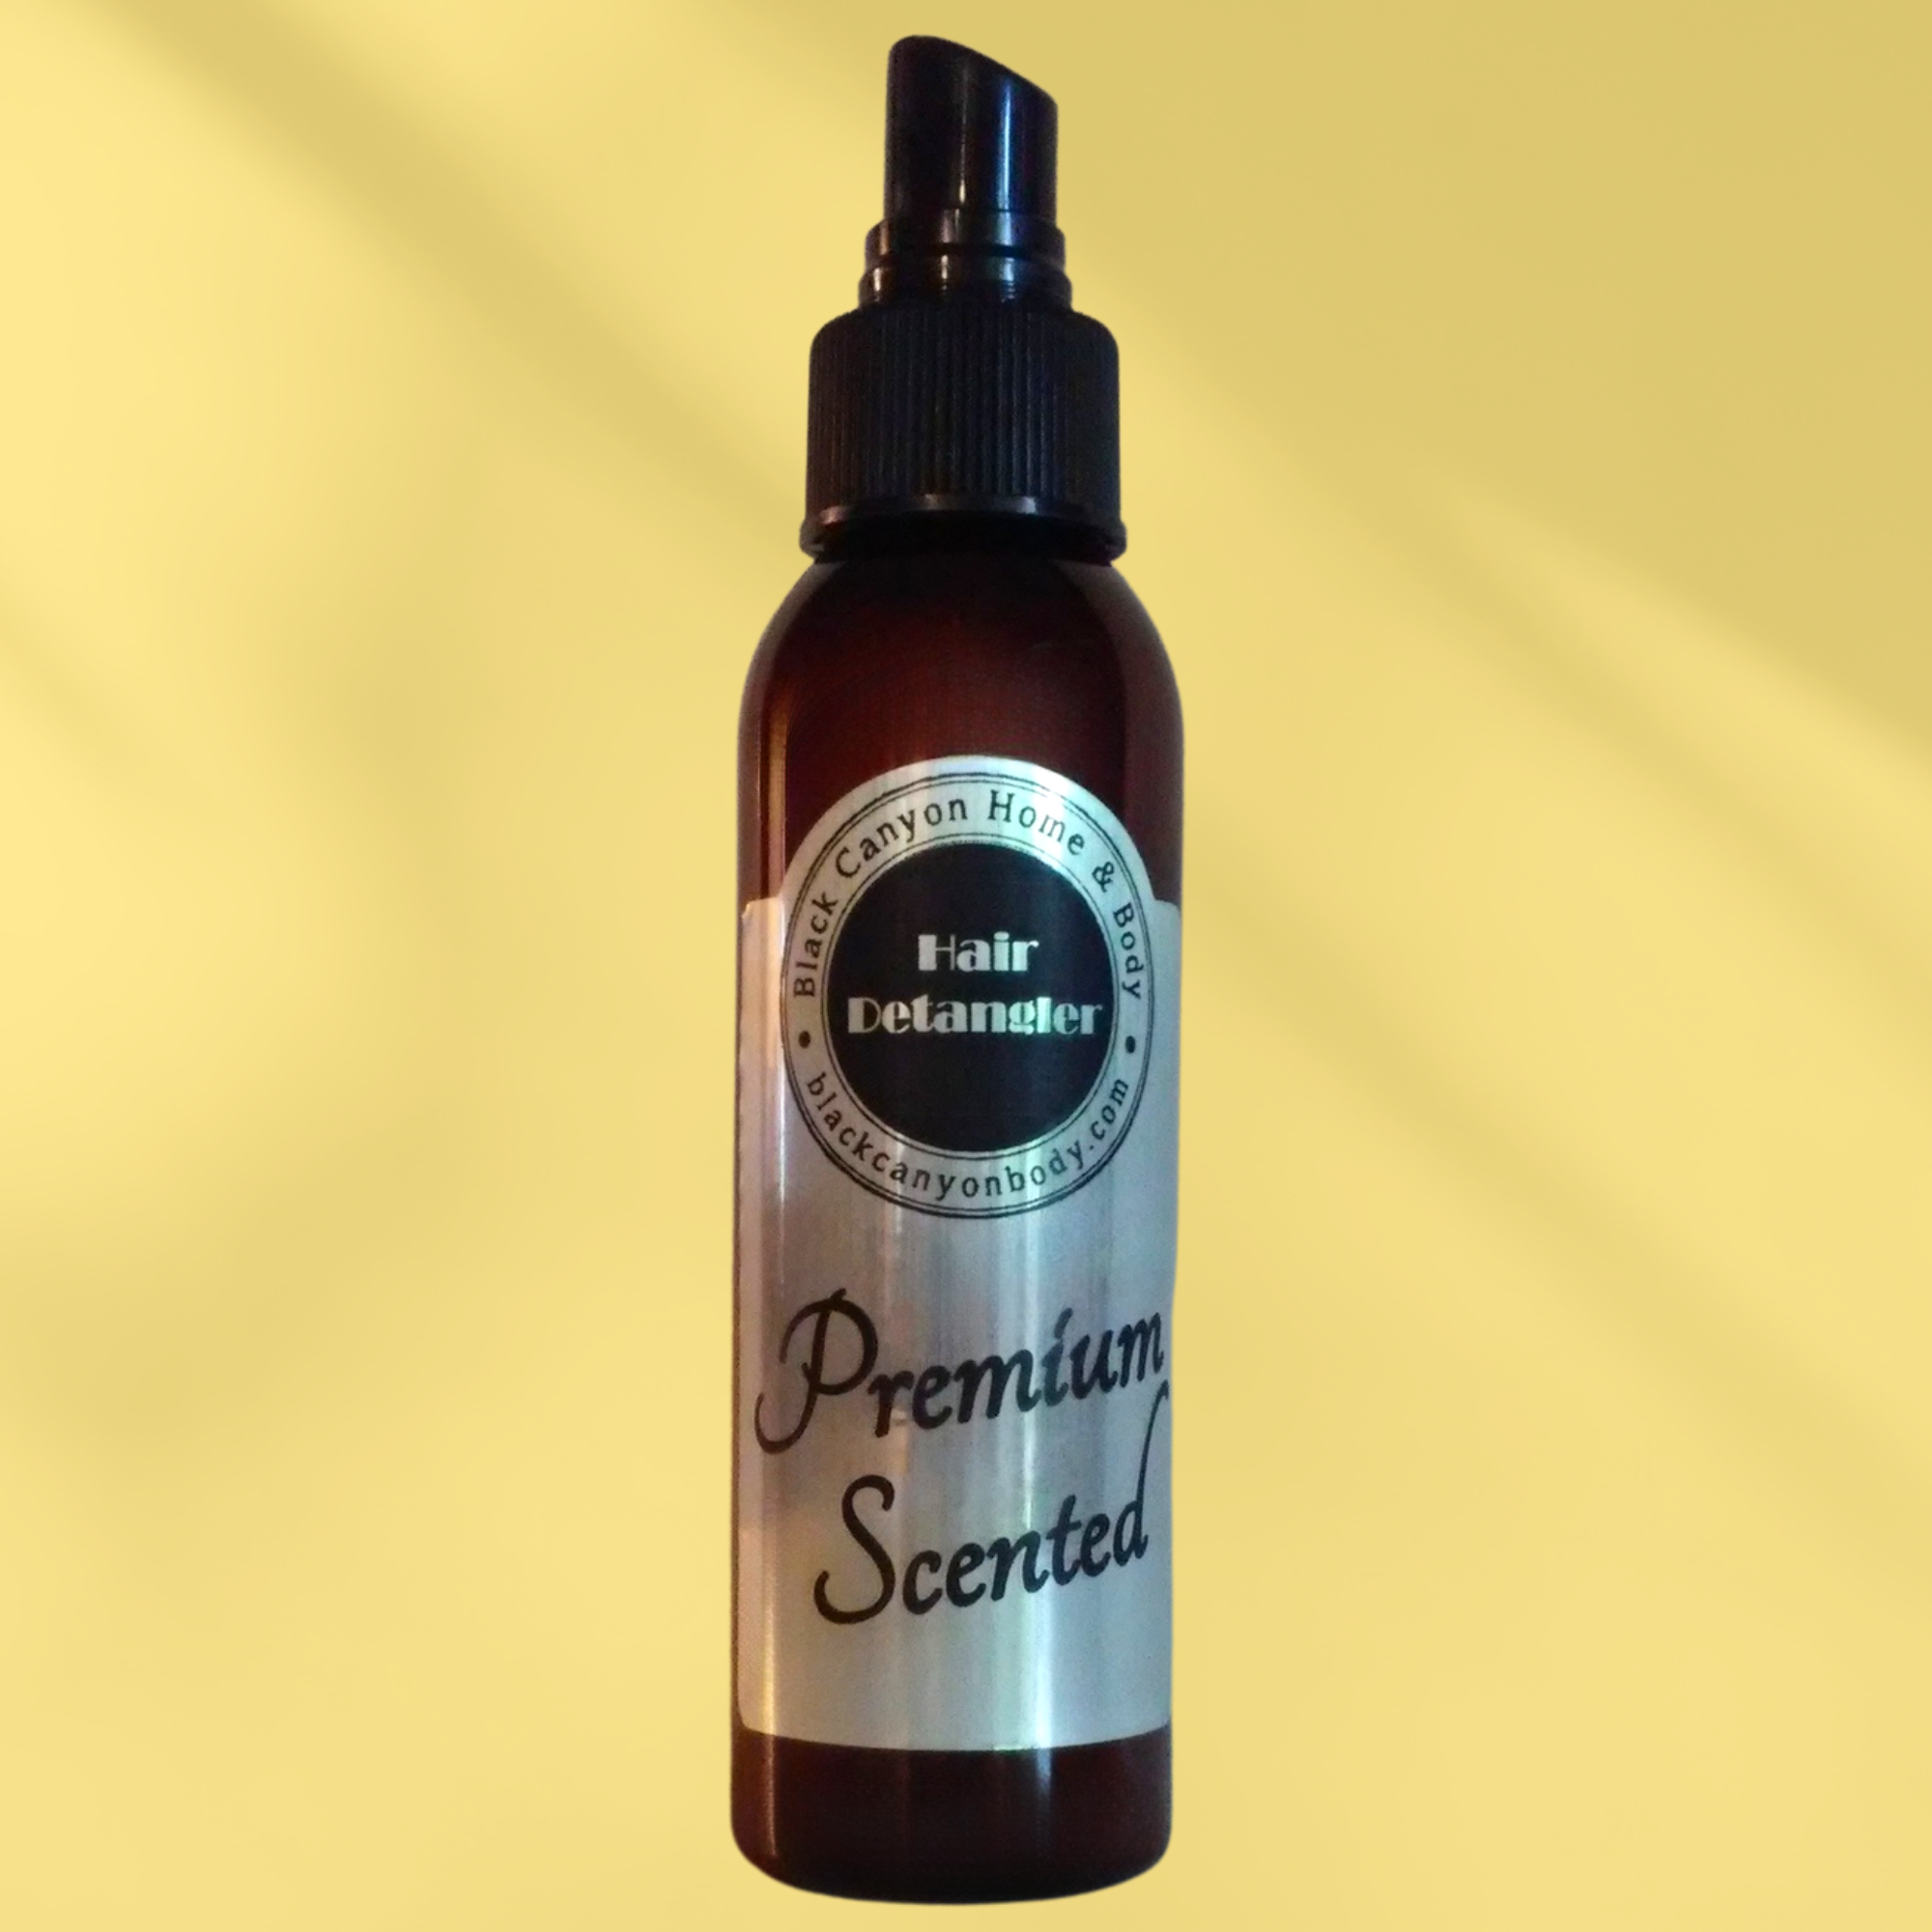 Black Canyon Bartlett Pear & Brandy Scented Hair Detangler Spray with Olive Oil